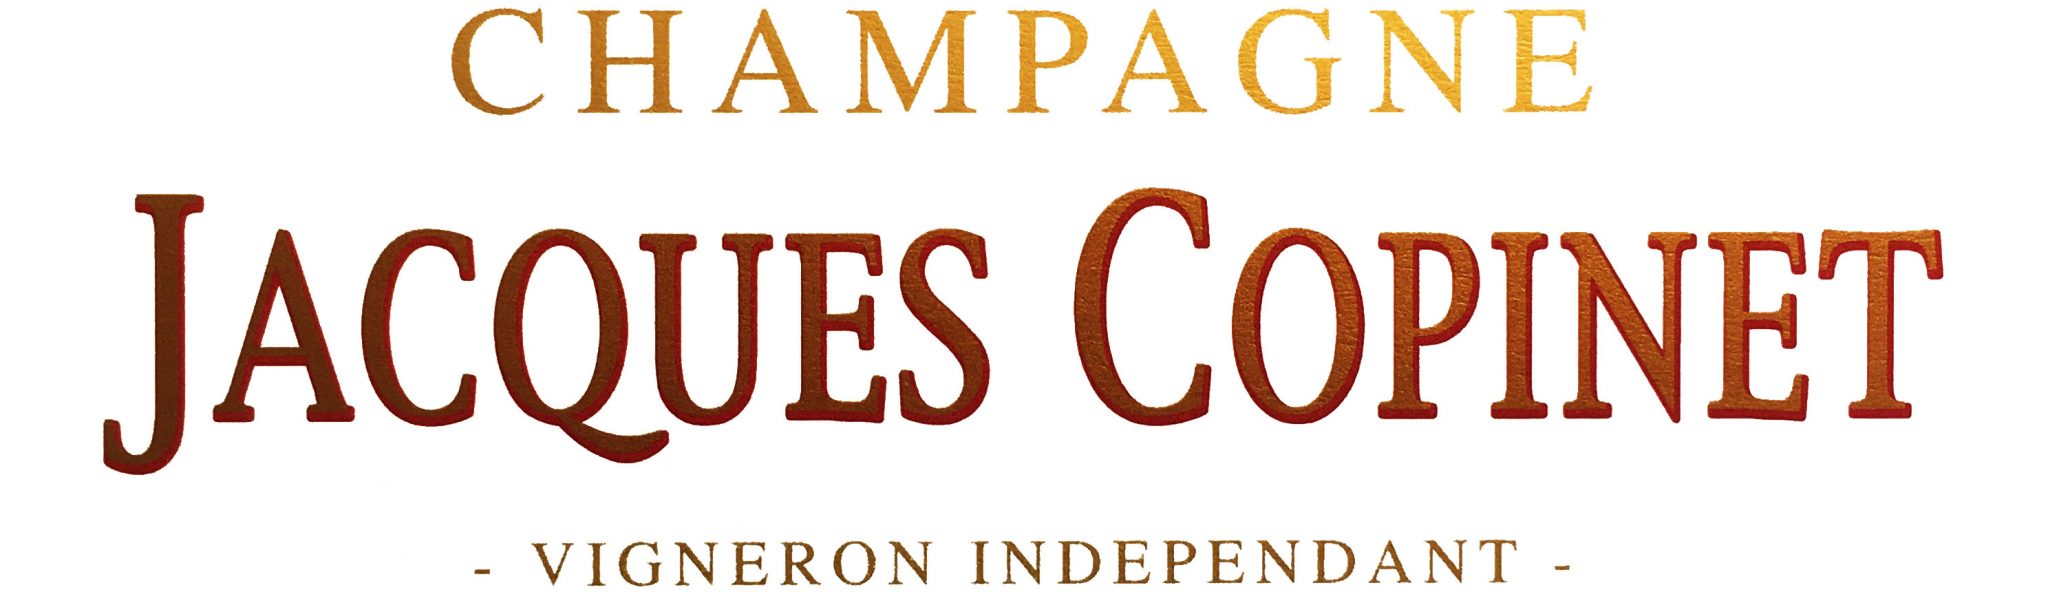 Champagne Jacques Copinet